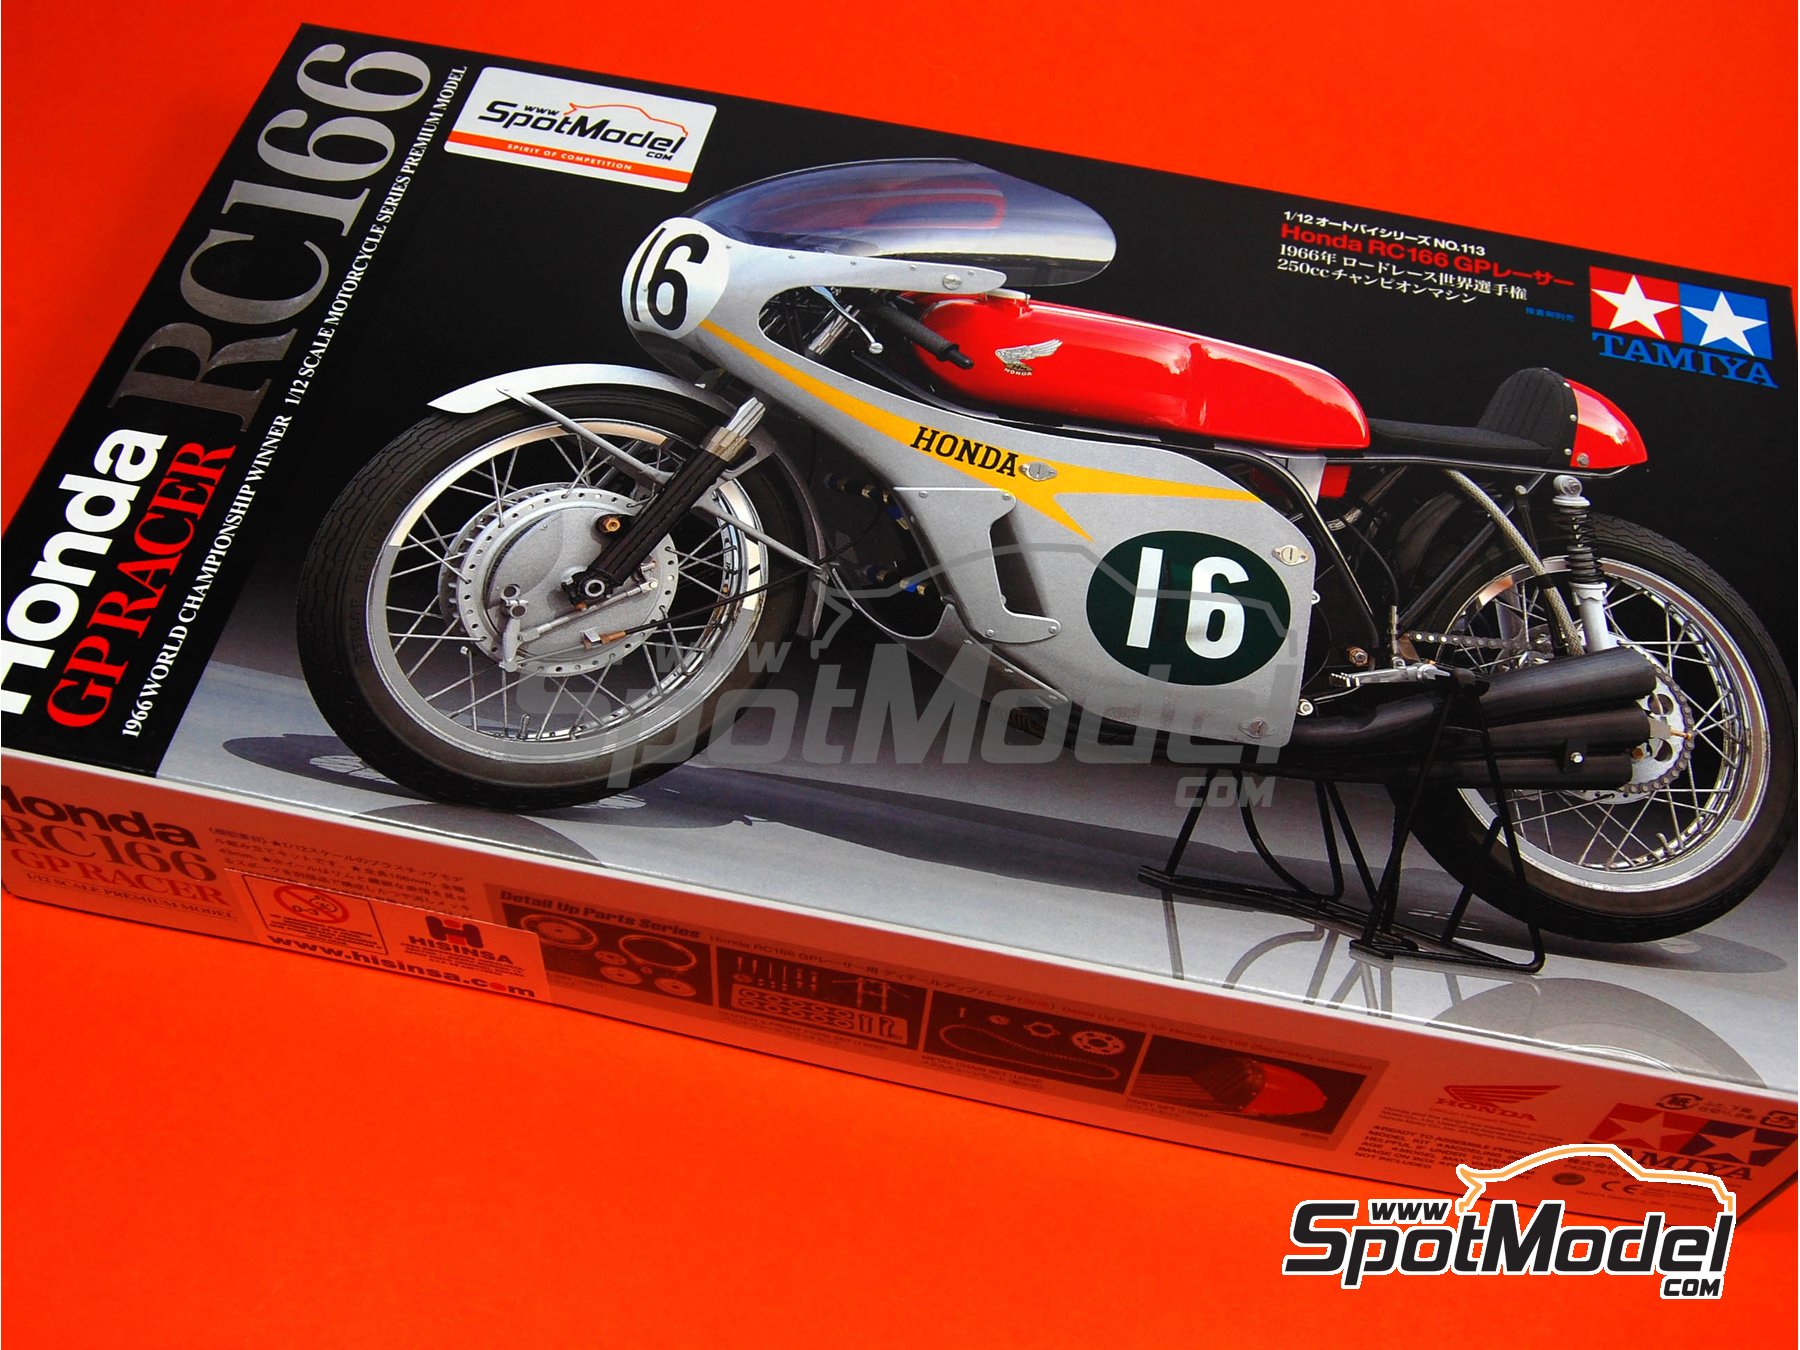 Tamiya 14113 Honda RC166 GP Racer Motorcycle Series No.113 1/12 Scale Model Kit